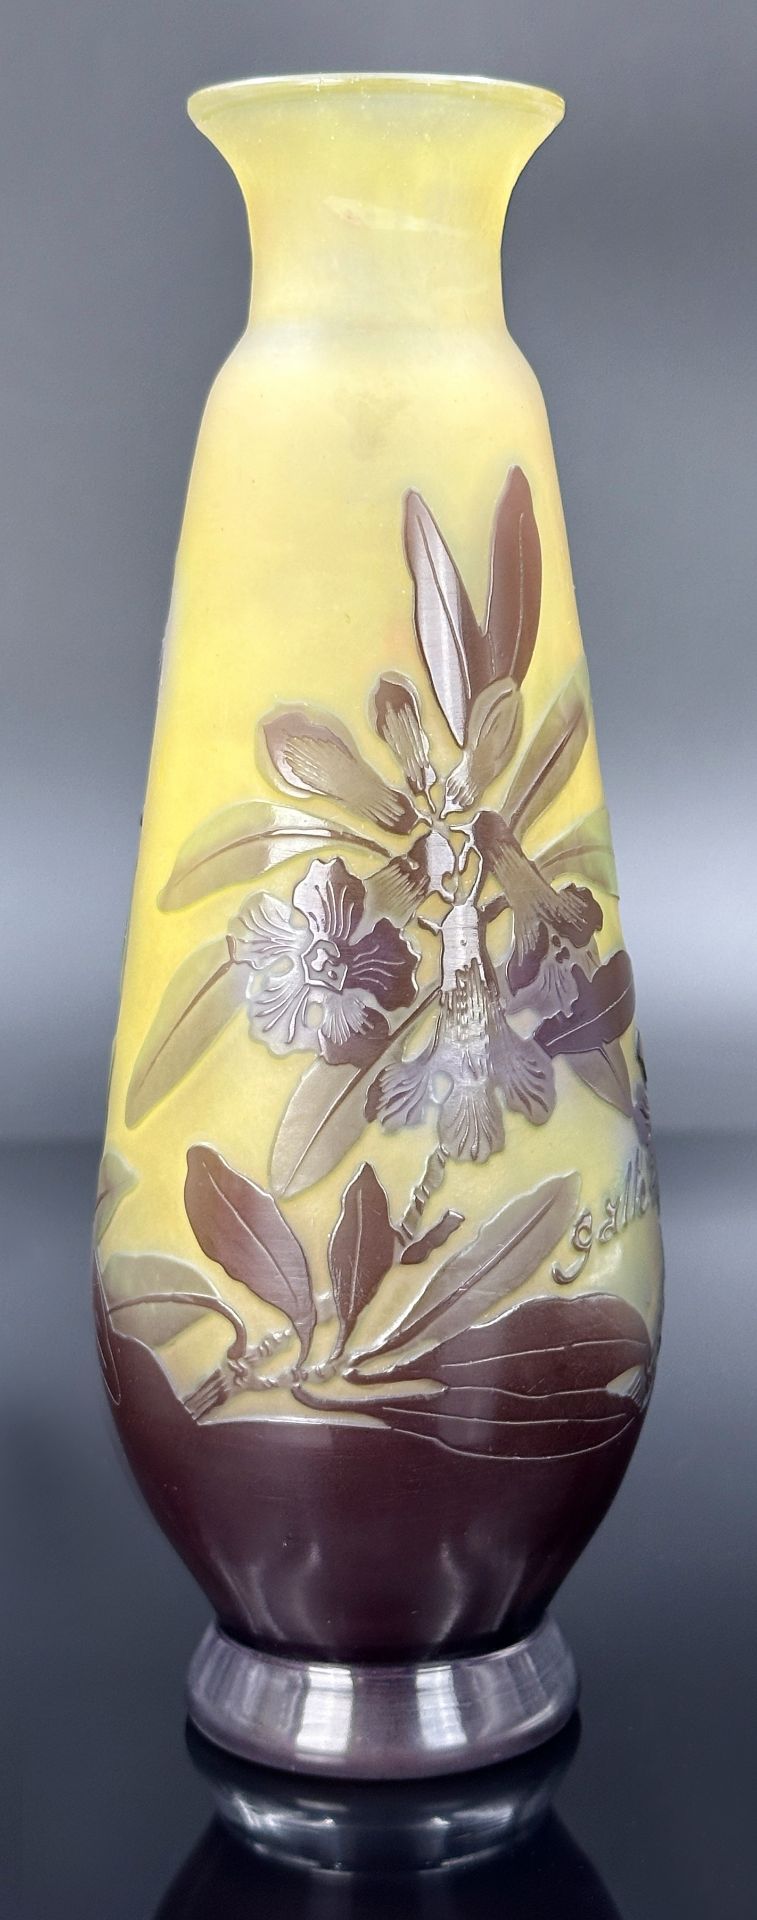 Small vase. Emile GALLÉ (1846 - 1904). Around 1900. - Image 4 of 10